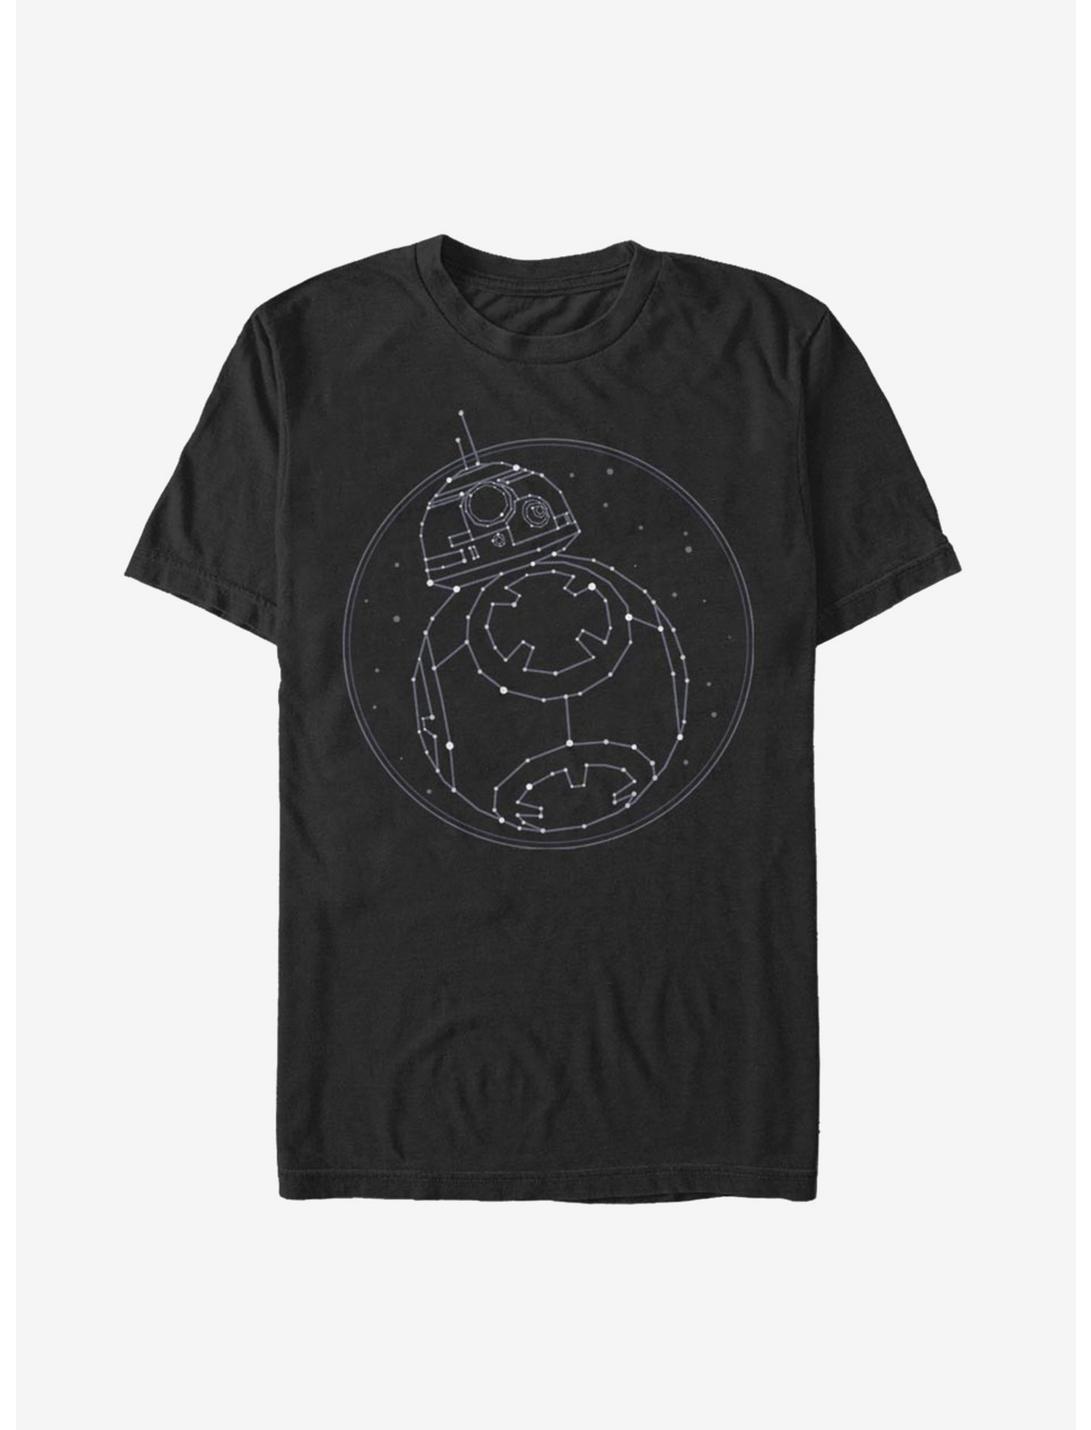 Star Wars Episode IX The Rise Of Skywalker Constellation T-Shirt, BLACK, hi-res